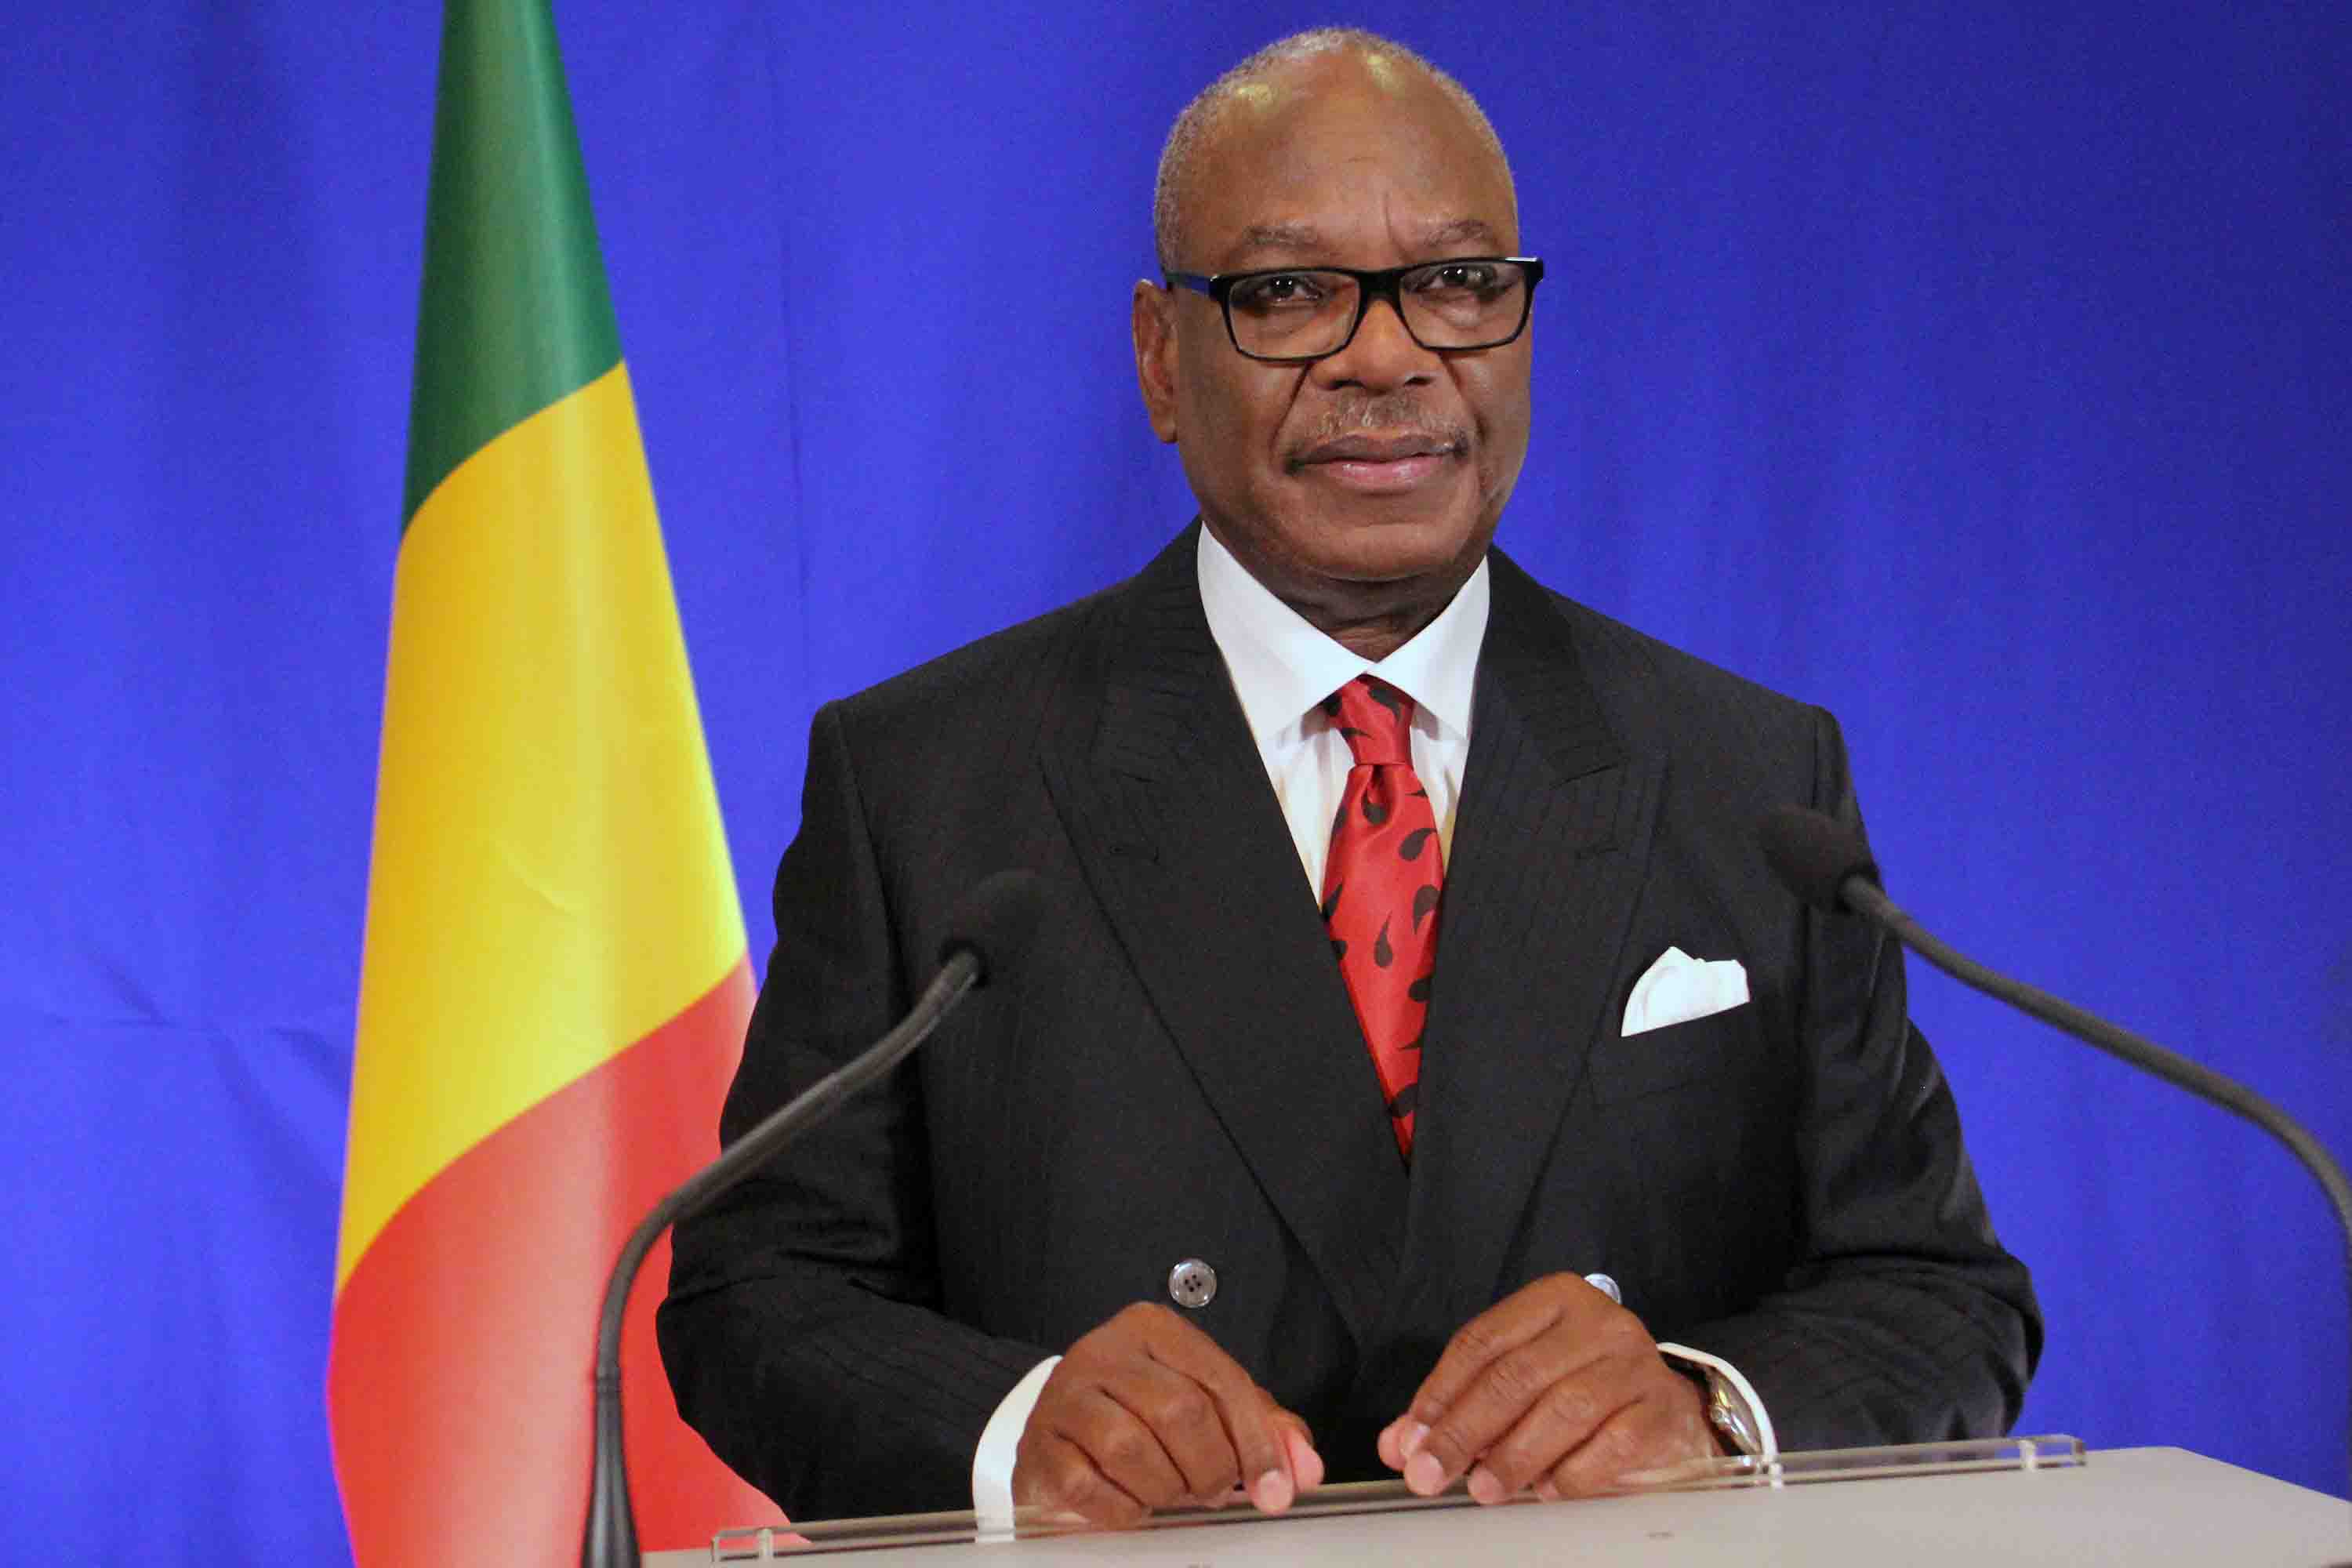 Mali’s incumbent president, Ibrahim Keita, adopted to run for second term